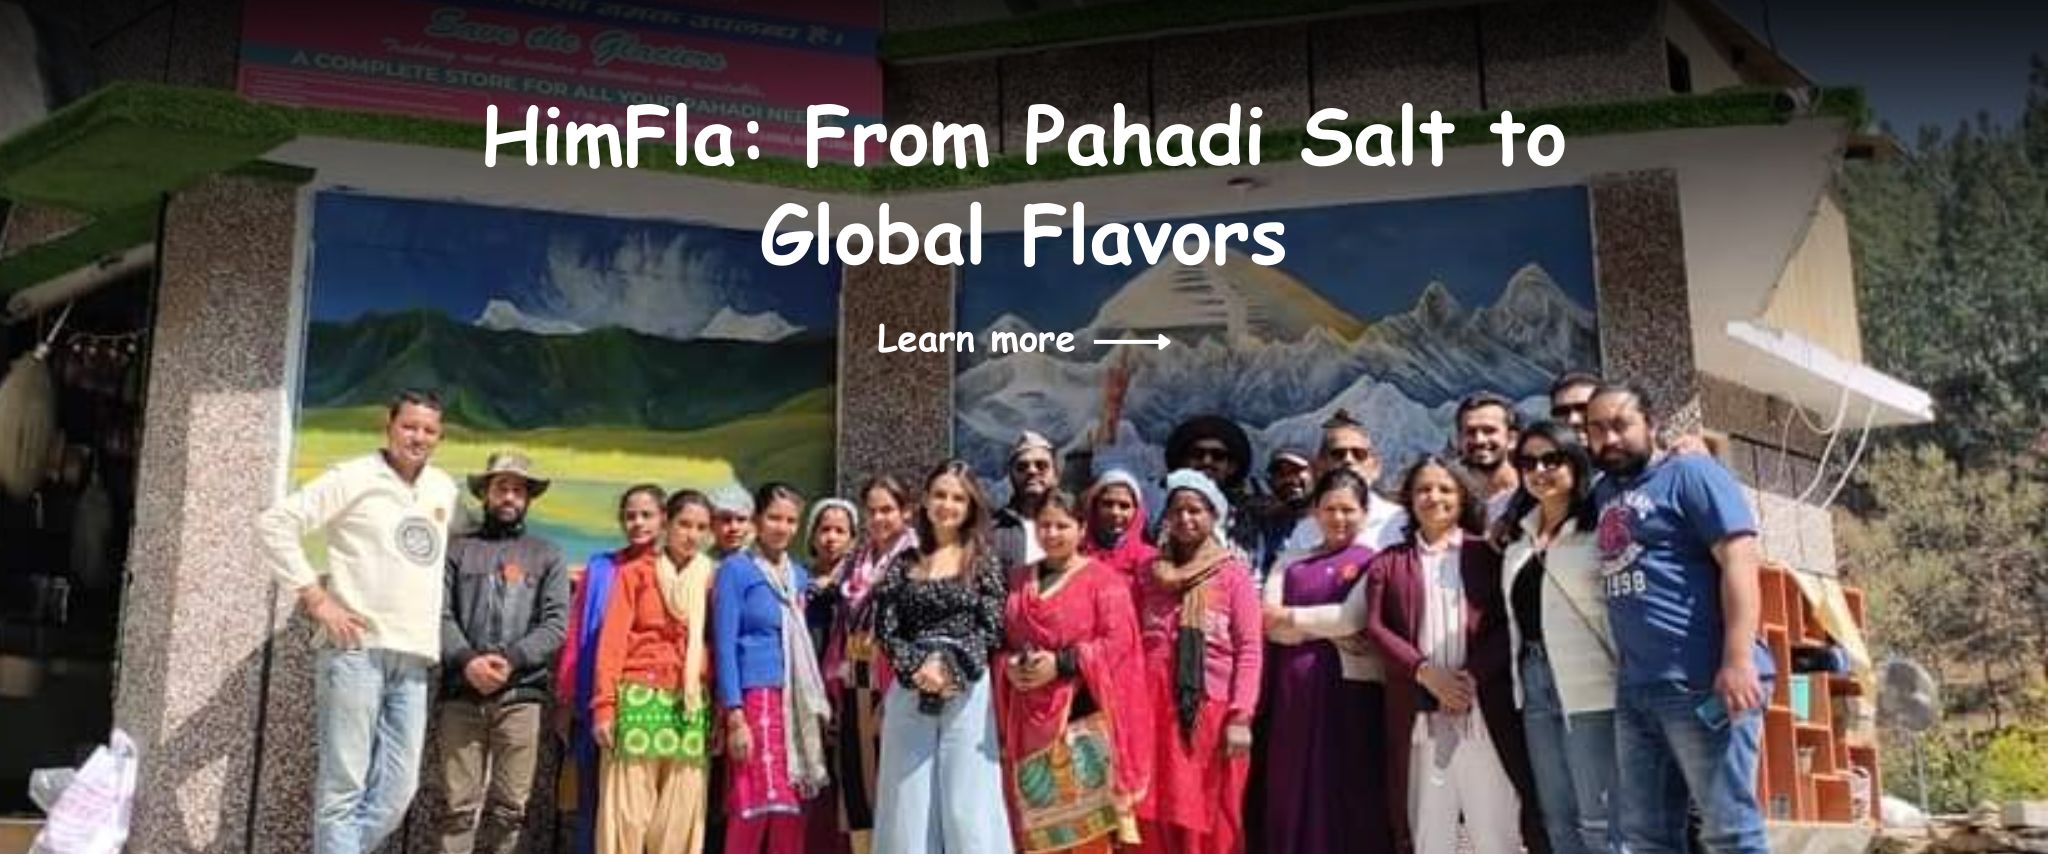 HimFla From Pahadi Salt to Global Flavors